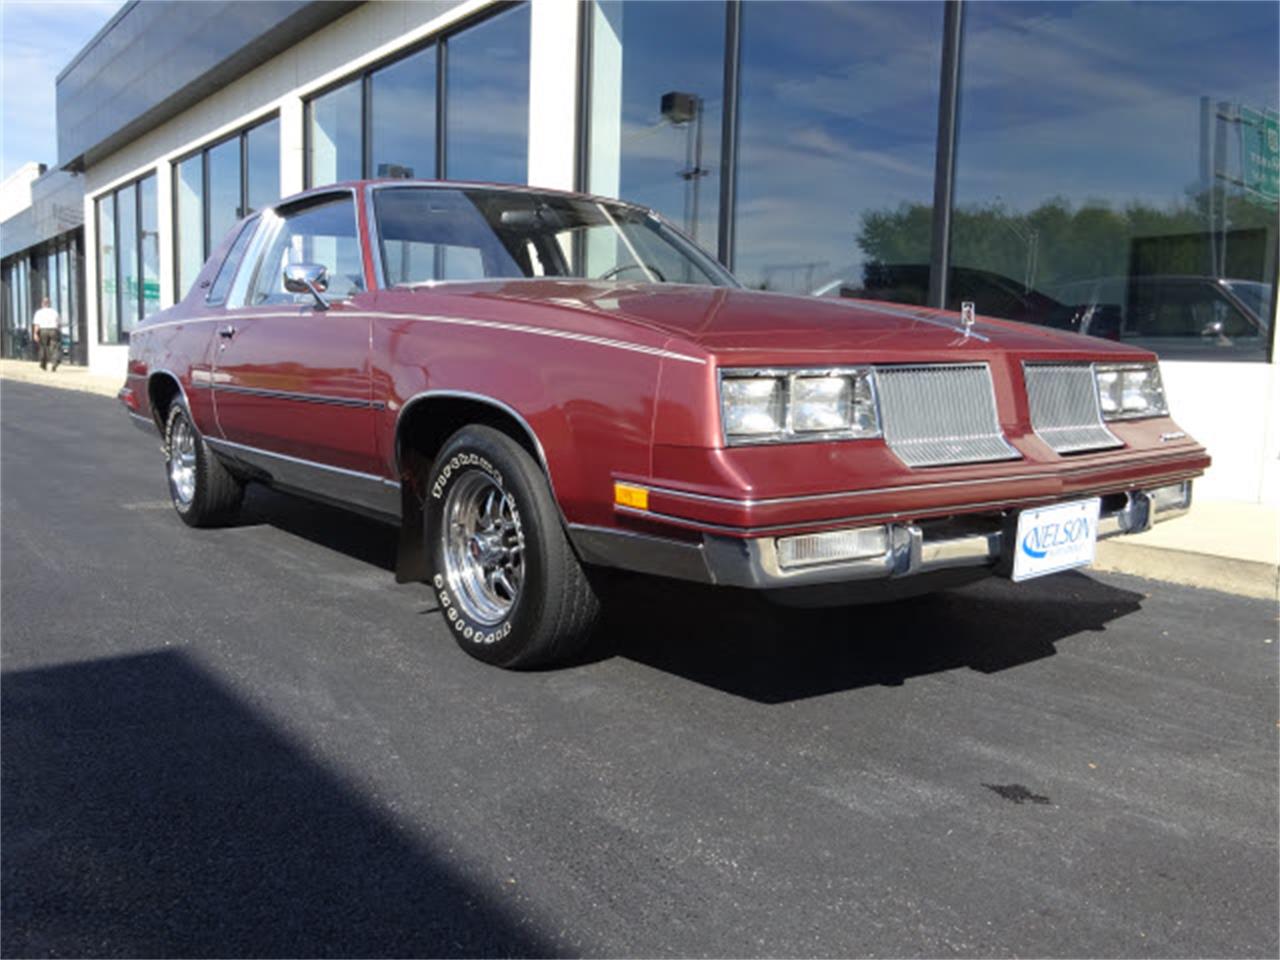 For Sale: 1986 Oldsmobile Cutlass Supreme in Marysville, Ohio.